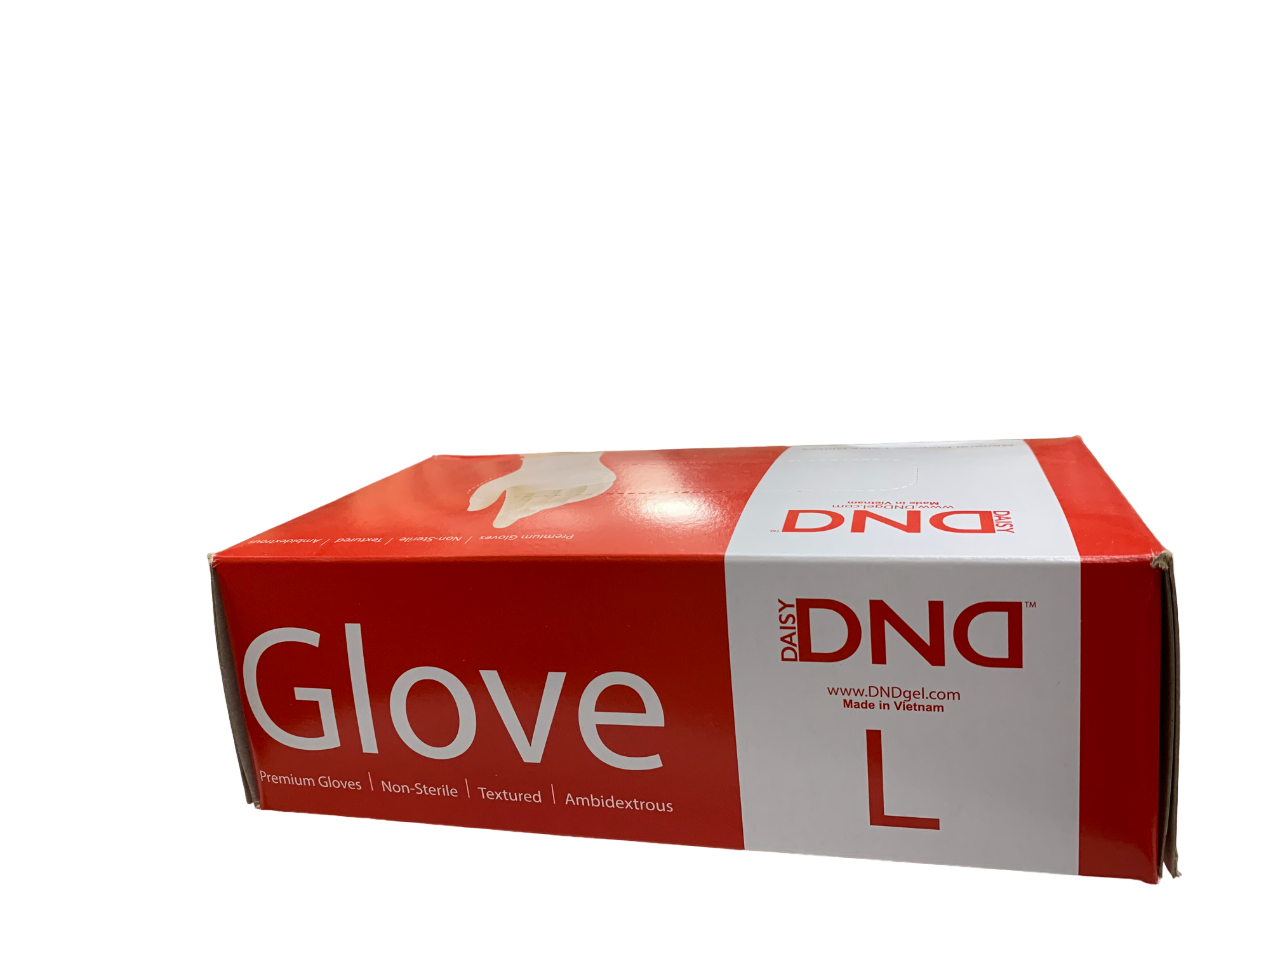 DND Glove Box